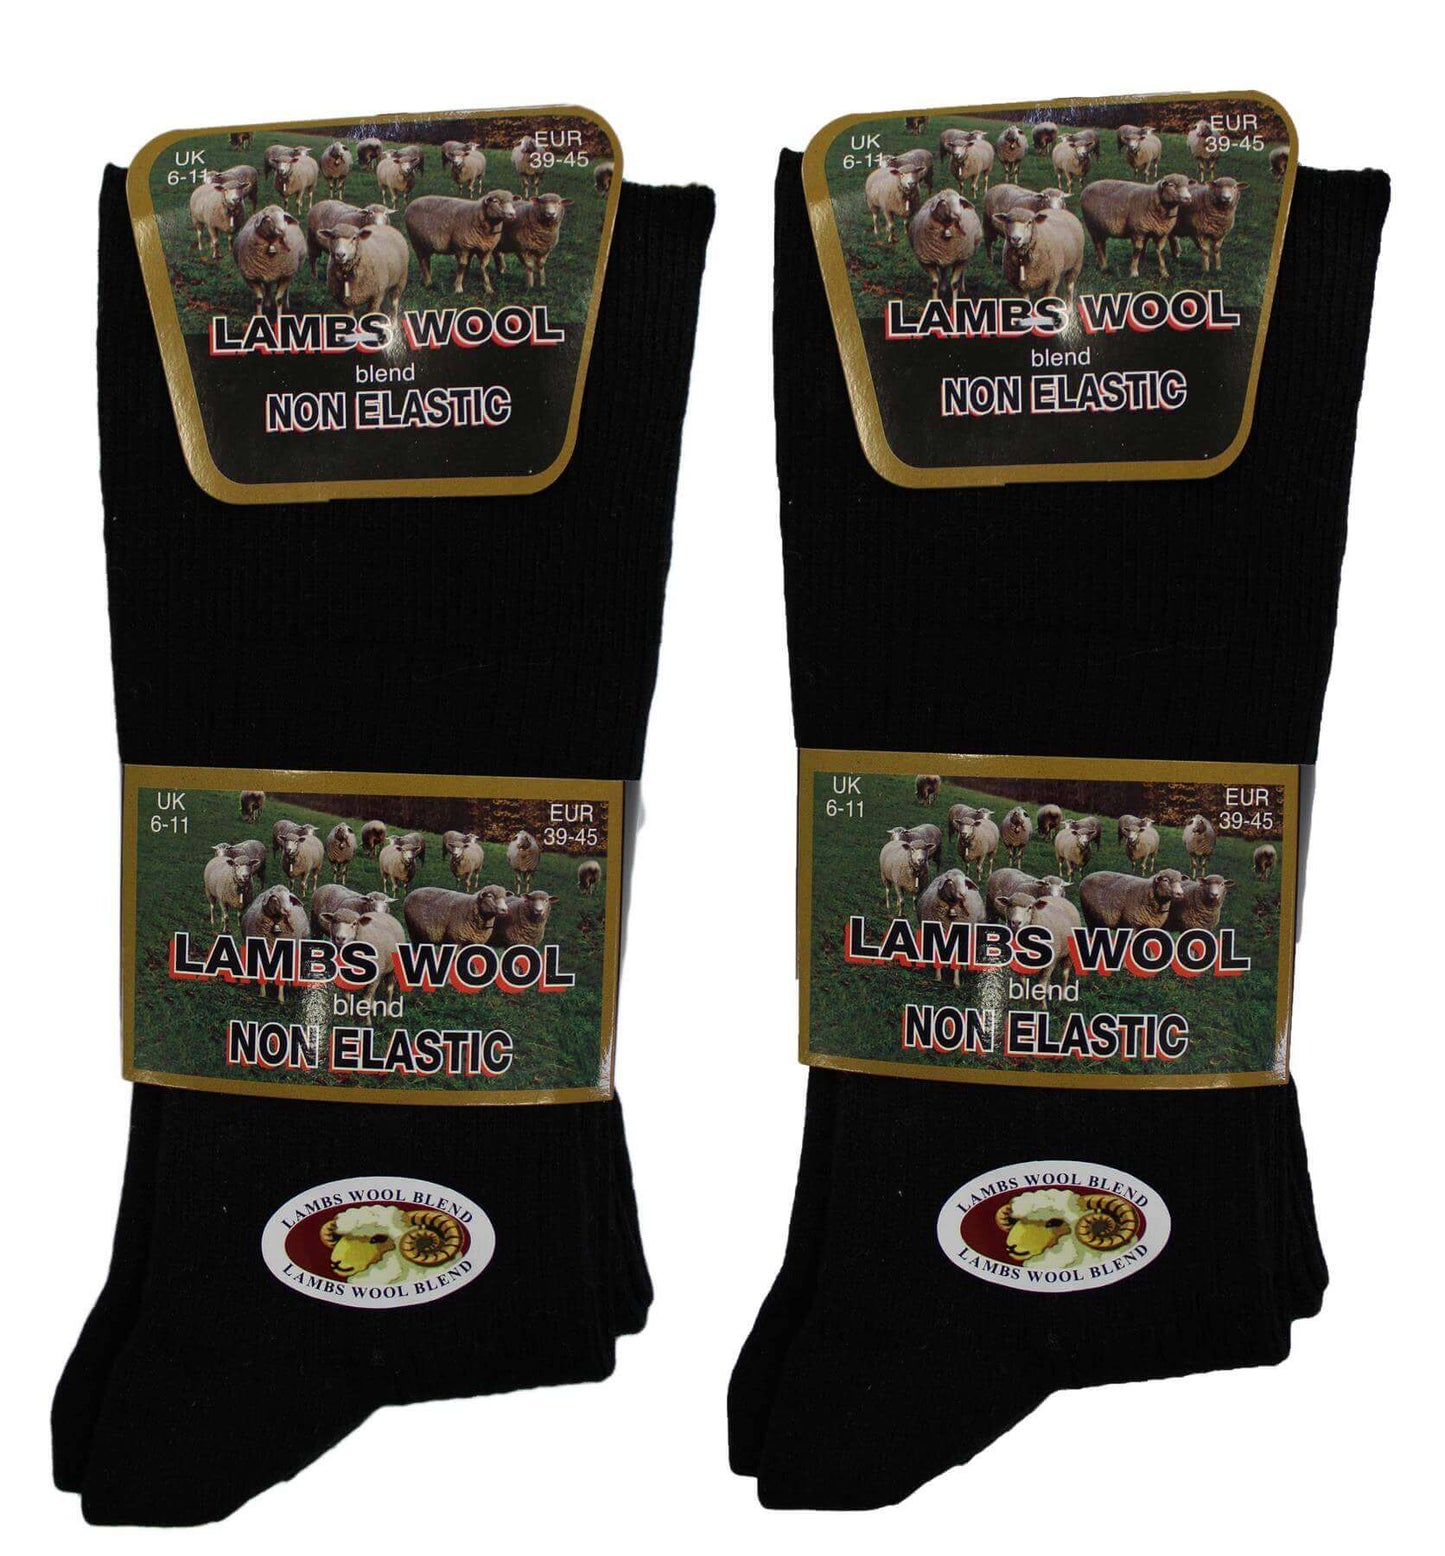 6 Pairs Men's Loose Top Socks Comfort Top Non Elastic Diabetic Wool Sock. Buy now for £8.00. A Socks by Sock Stack. 6-11, acrylic, black, boot, breathable, clothing, comfortable, cosy, diabetic, Lambs wool, loose top, mens, mens socks, non-elastic, socks,